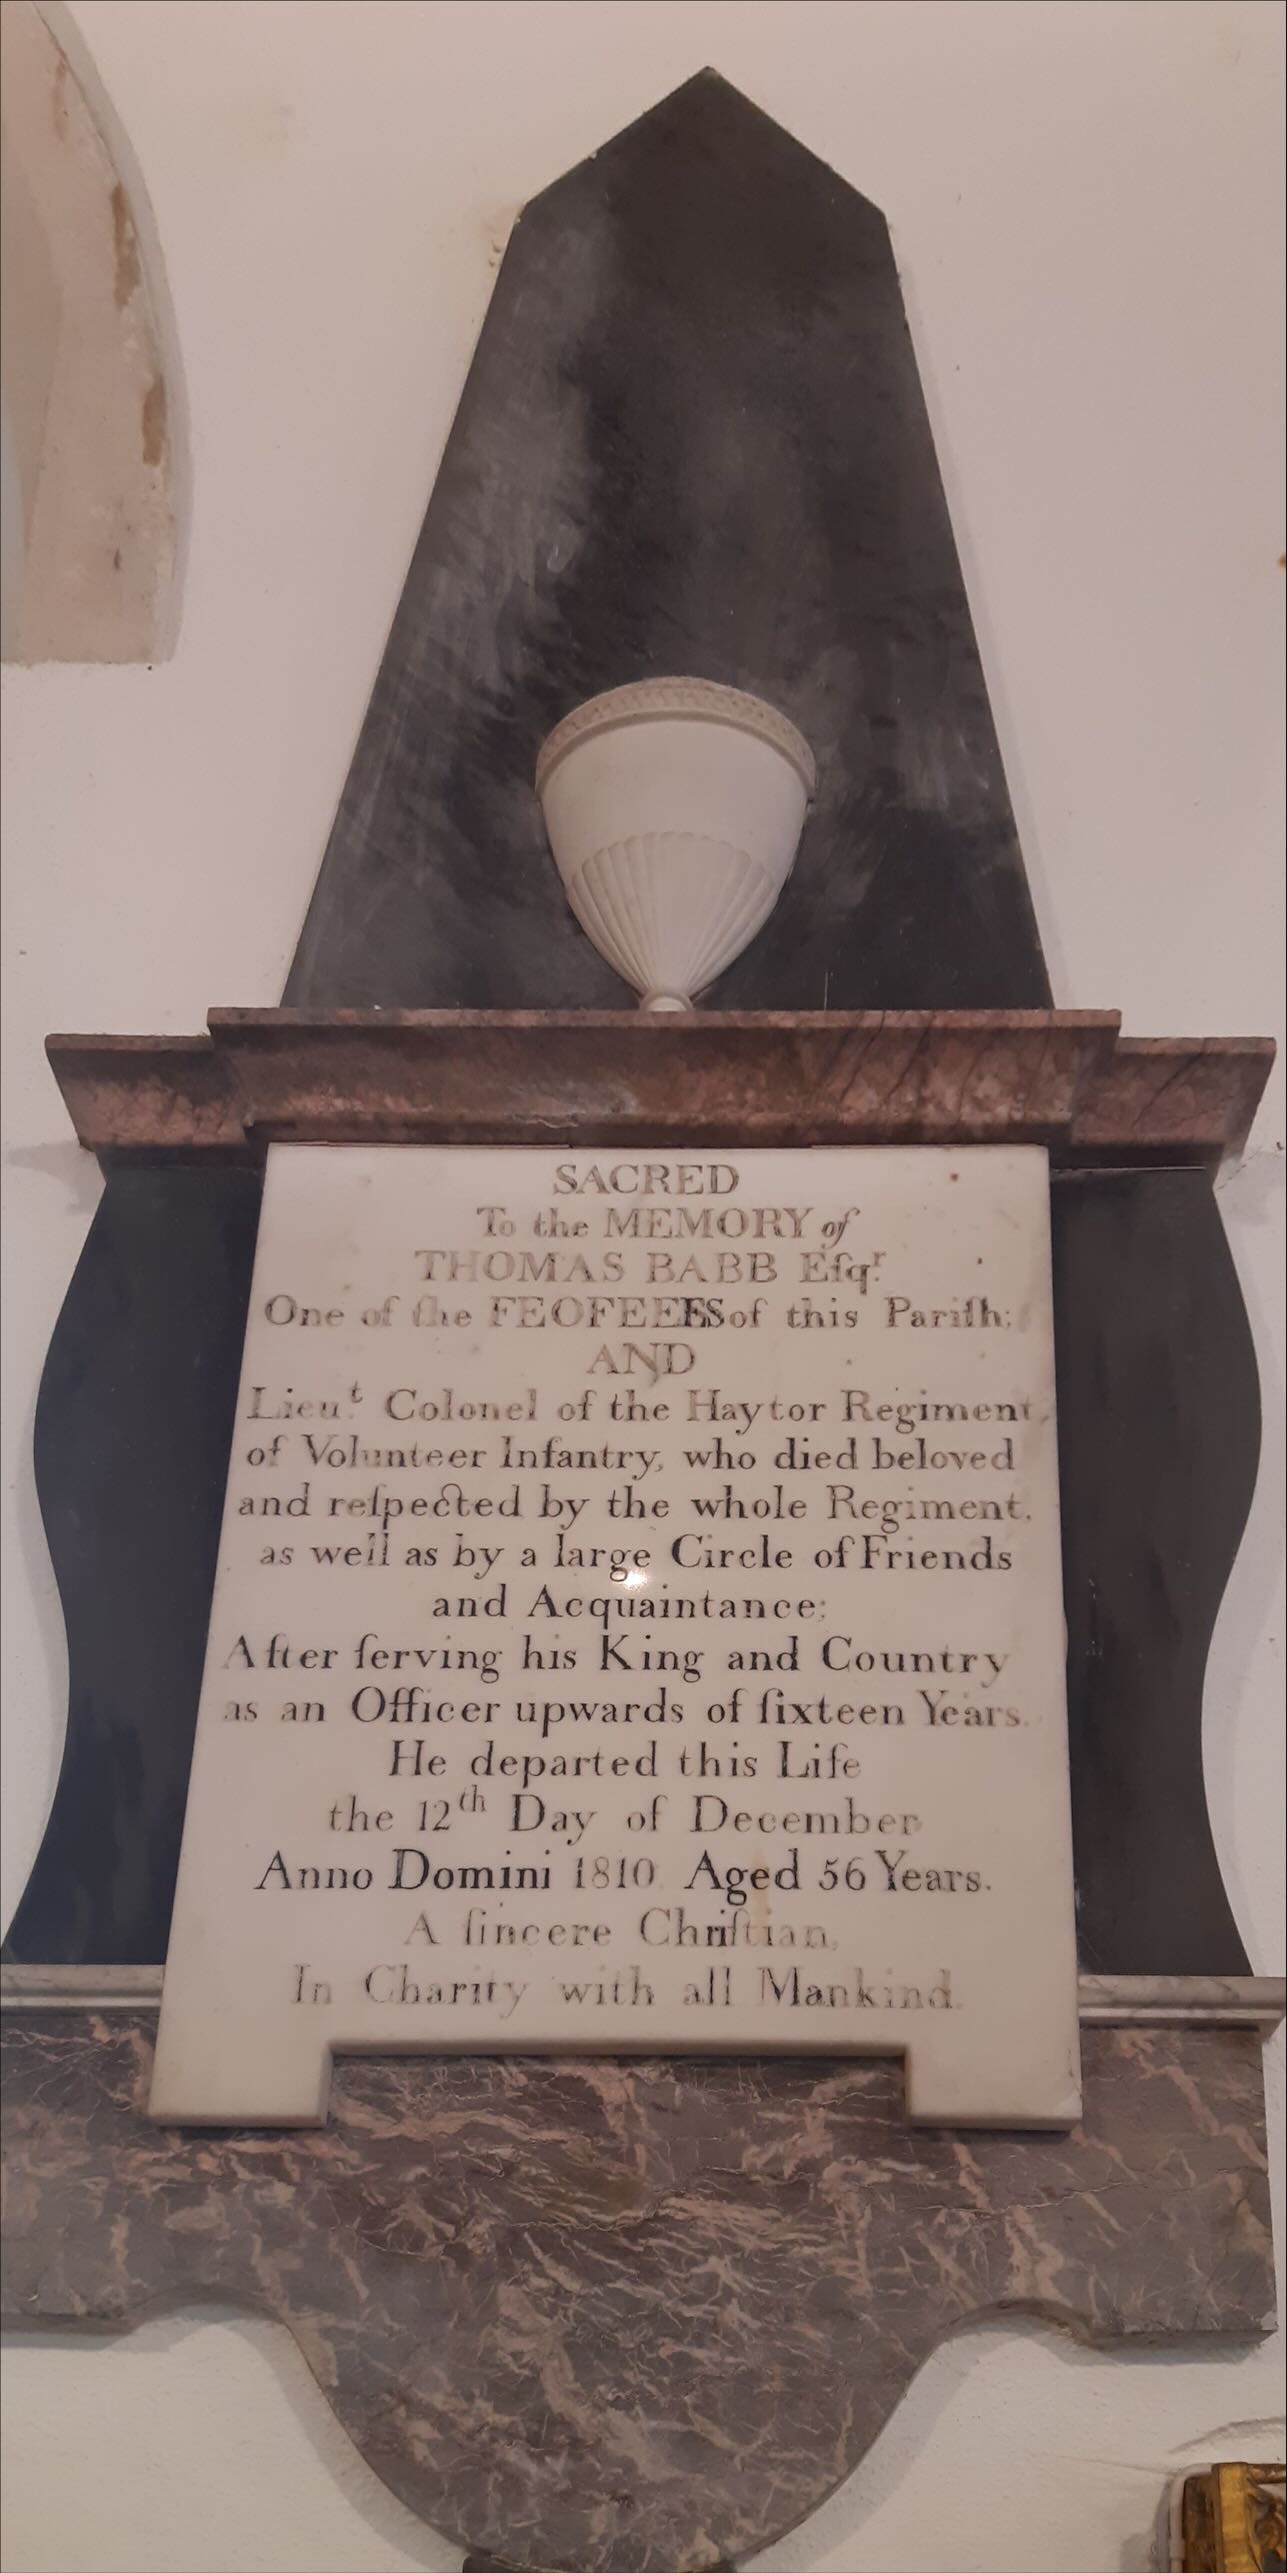 Thomas Babb: Feoffee of St. Mary’s of Wolborough, Devon (1754-1810)